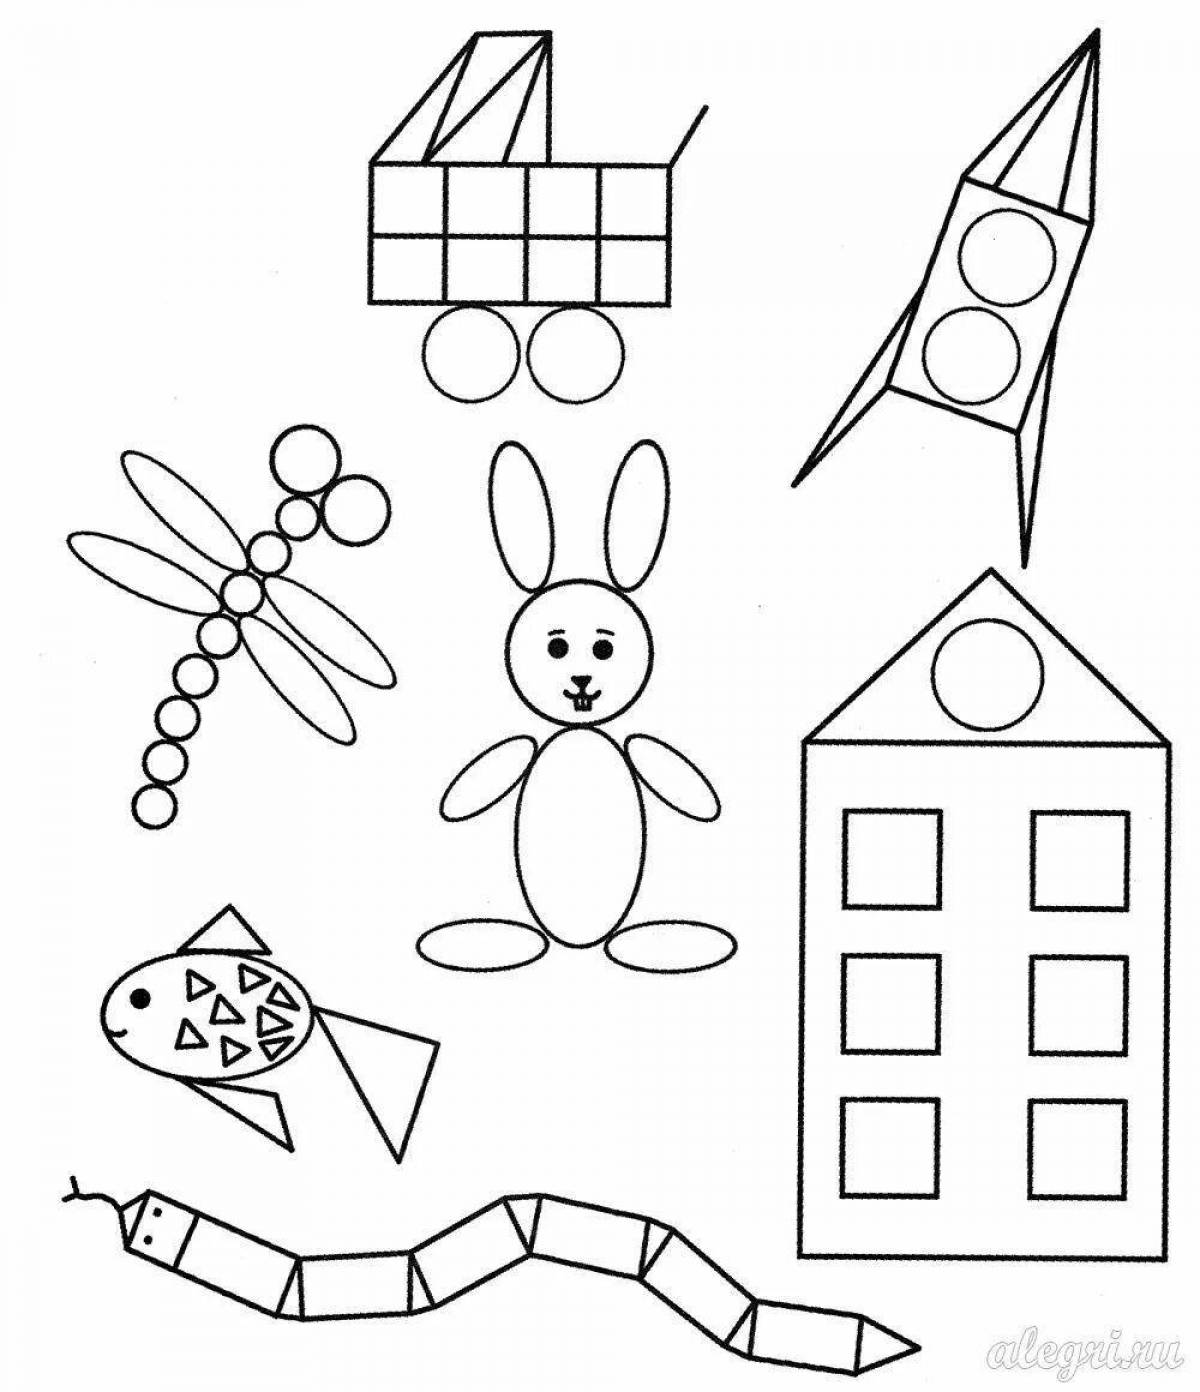 Geometric shapes for preschoolers #7